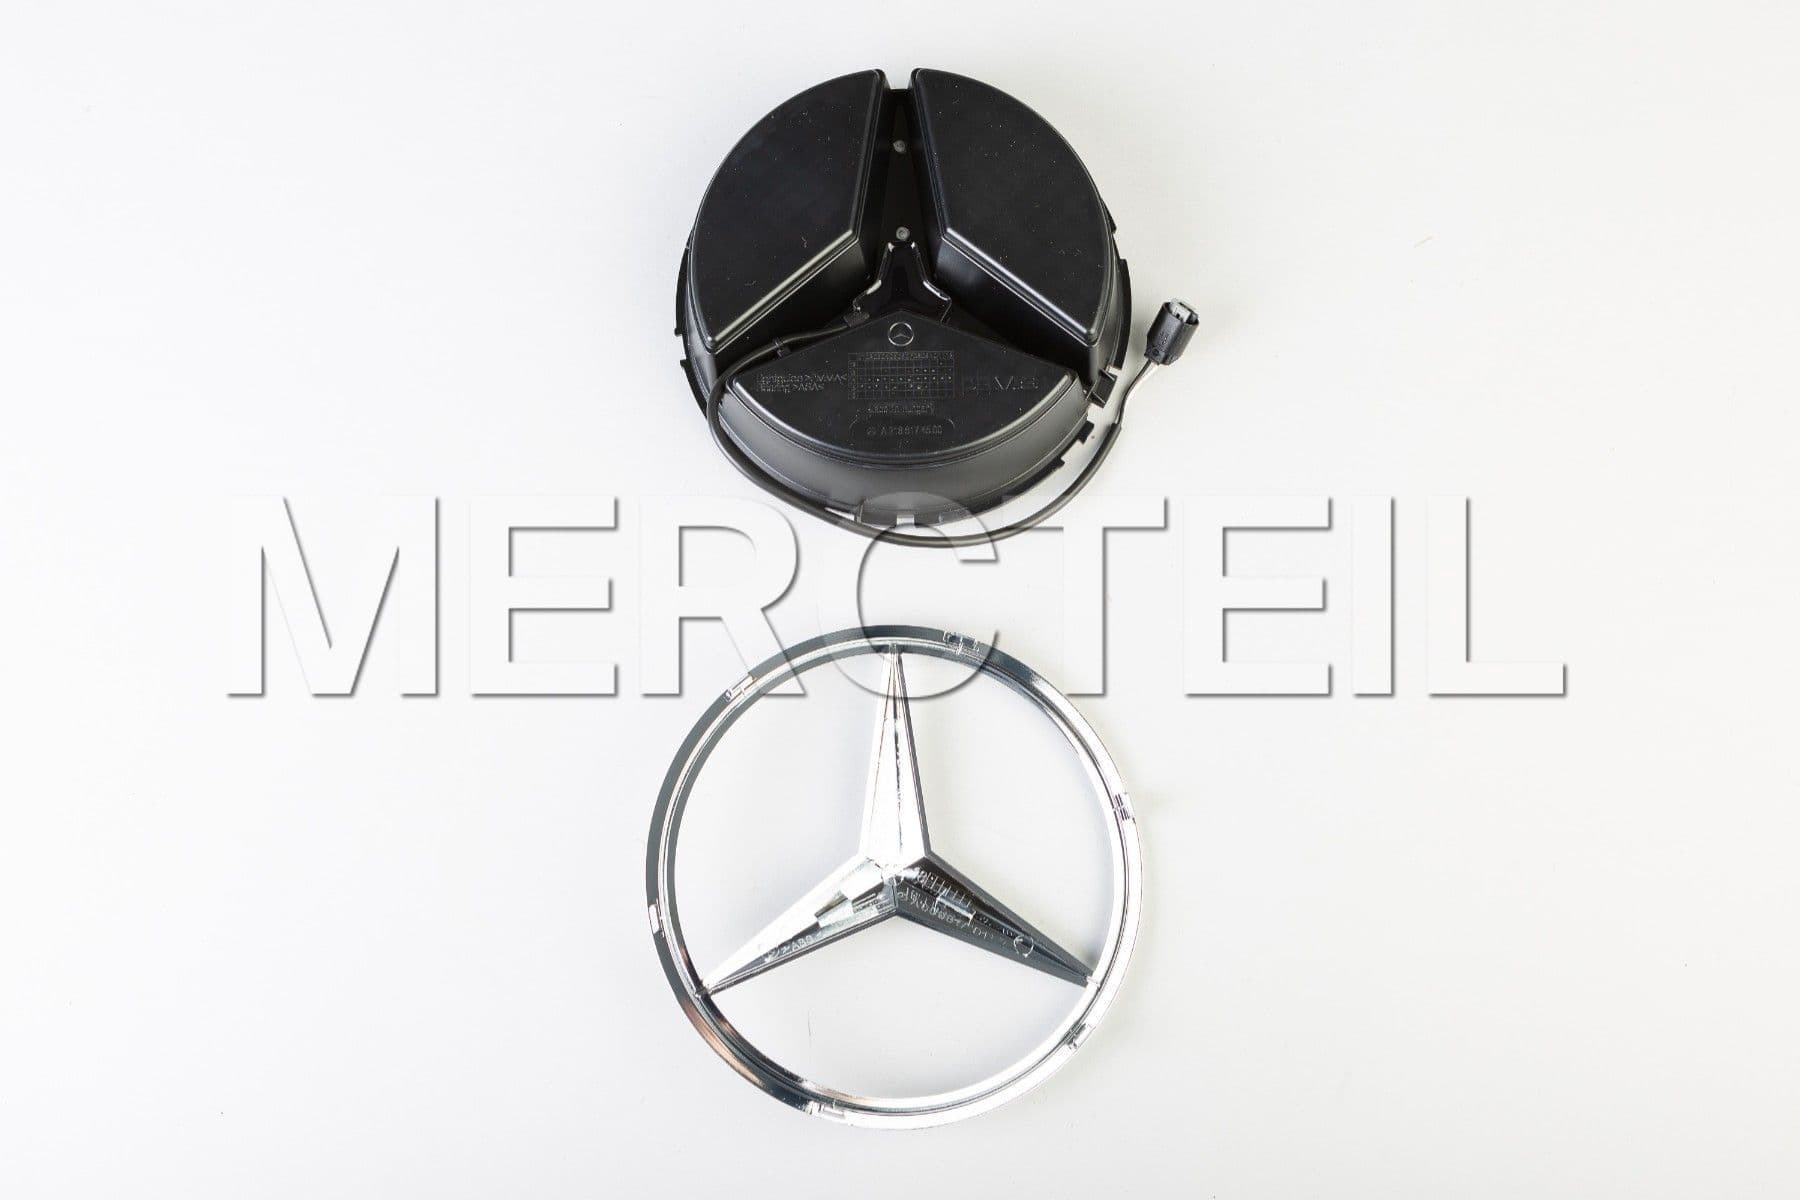 Illuminated Mercedes Star LED Genuine Mercedes Benz (part number: A1668201513)